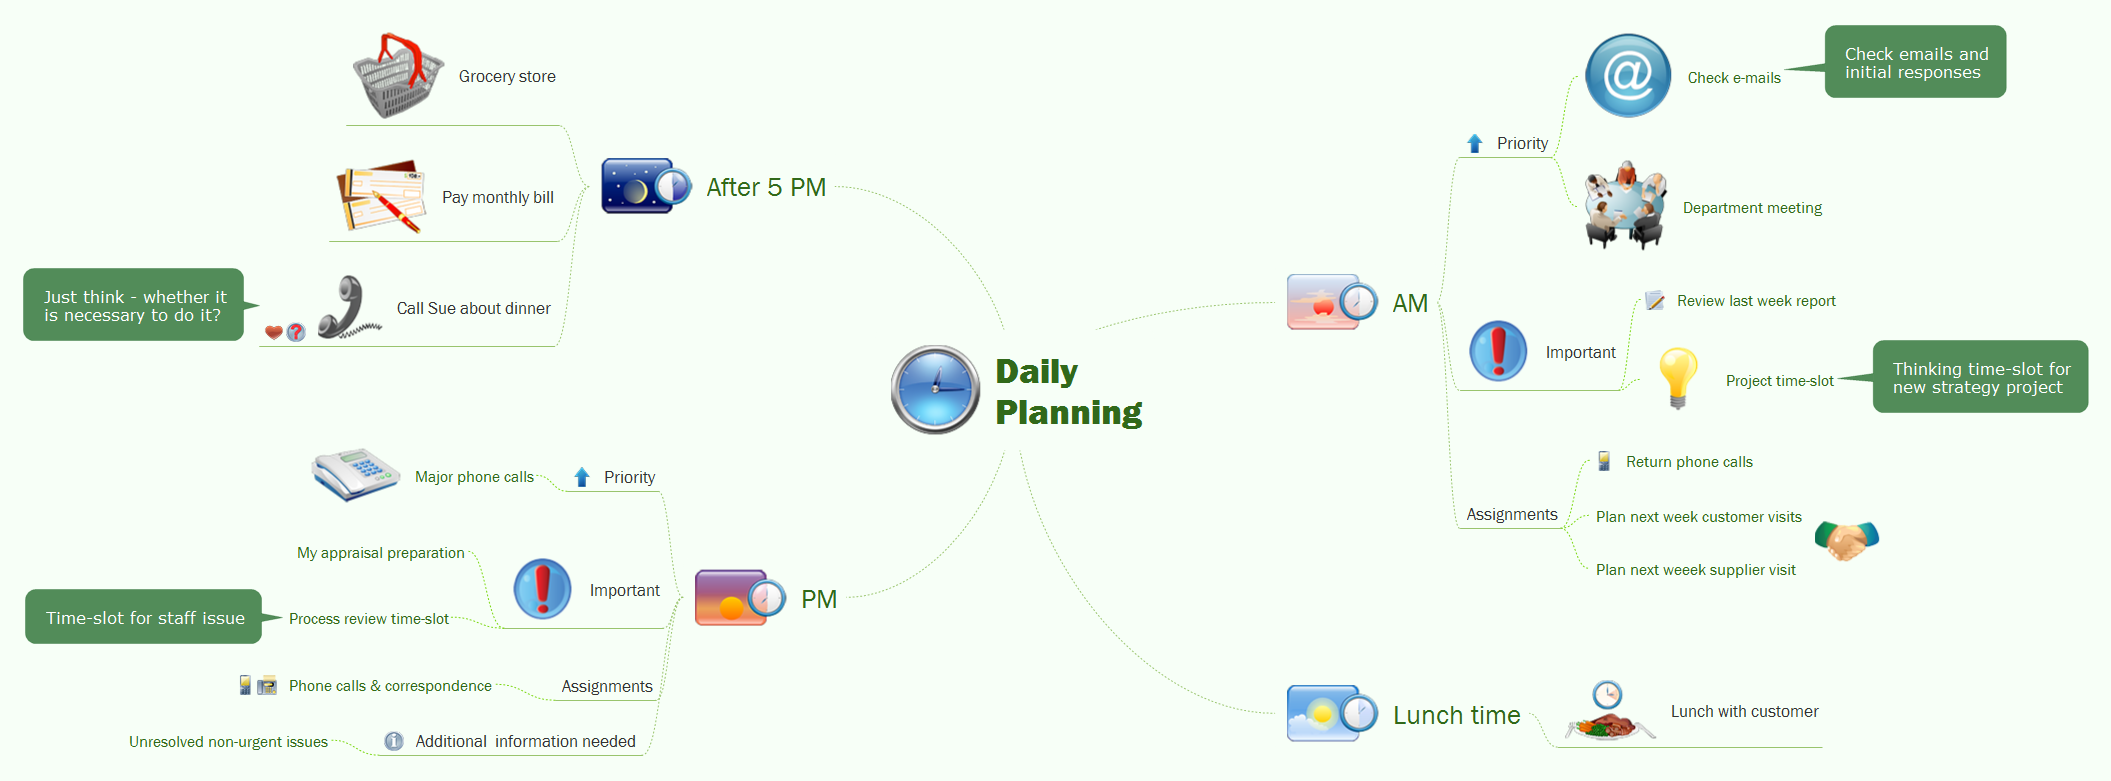 Daily planning mindmap